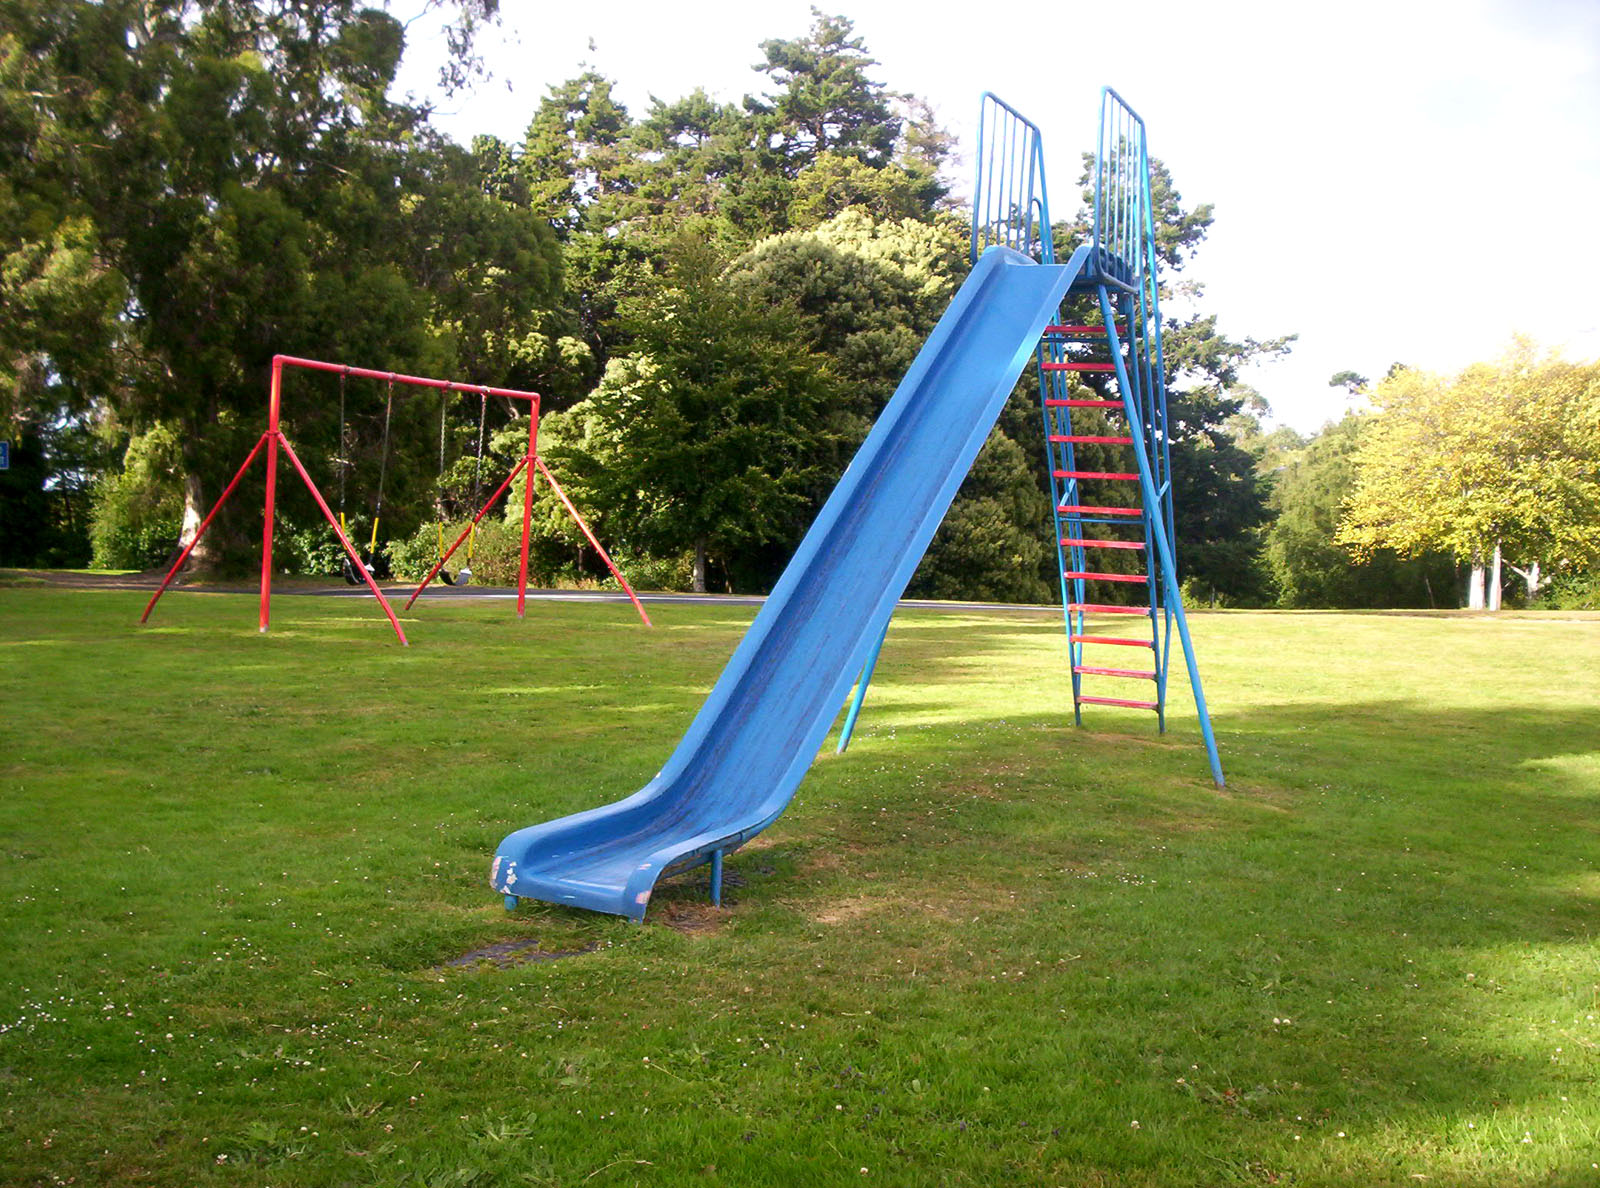 Blue Slide, Blue, Objects, Slide, Playground, HQ Photo